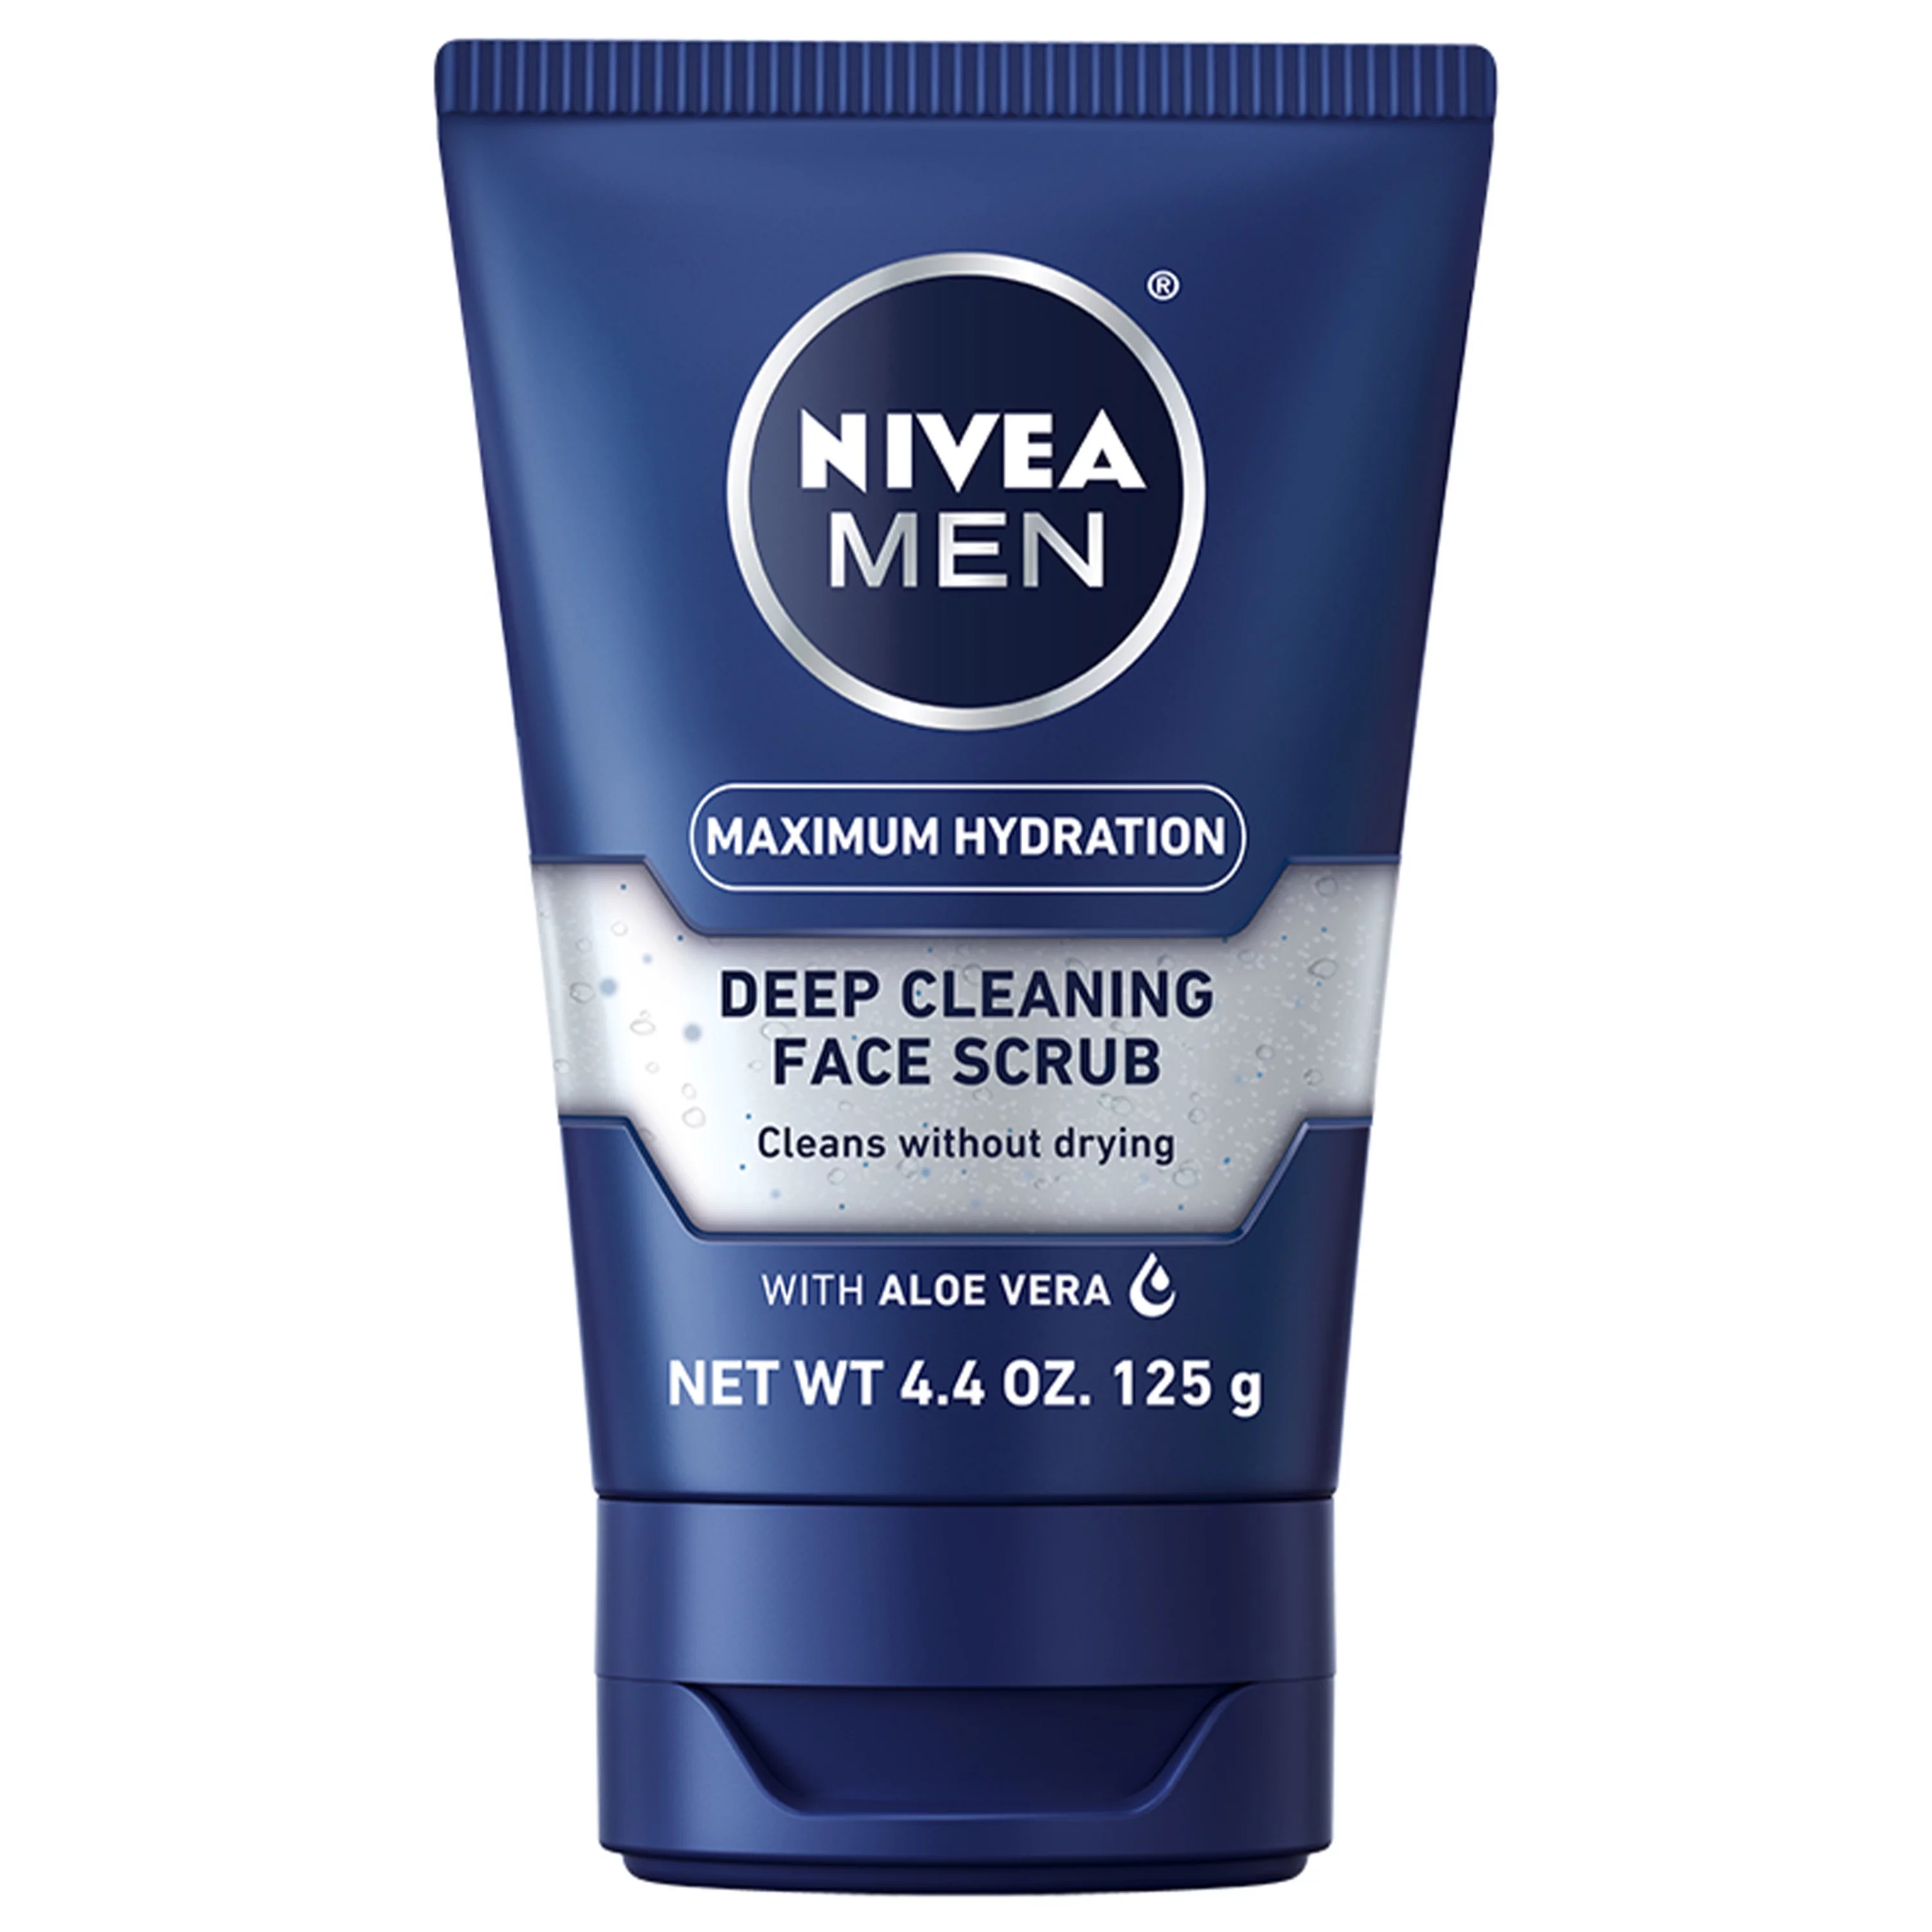 NIVEA MEN Maximum Hydration Deep Cleaning Face Scrub with Aloe Vera, 4.4 Oz Tube